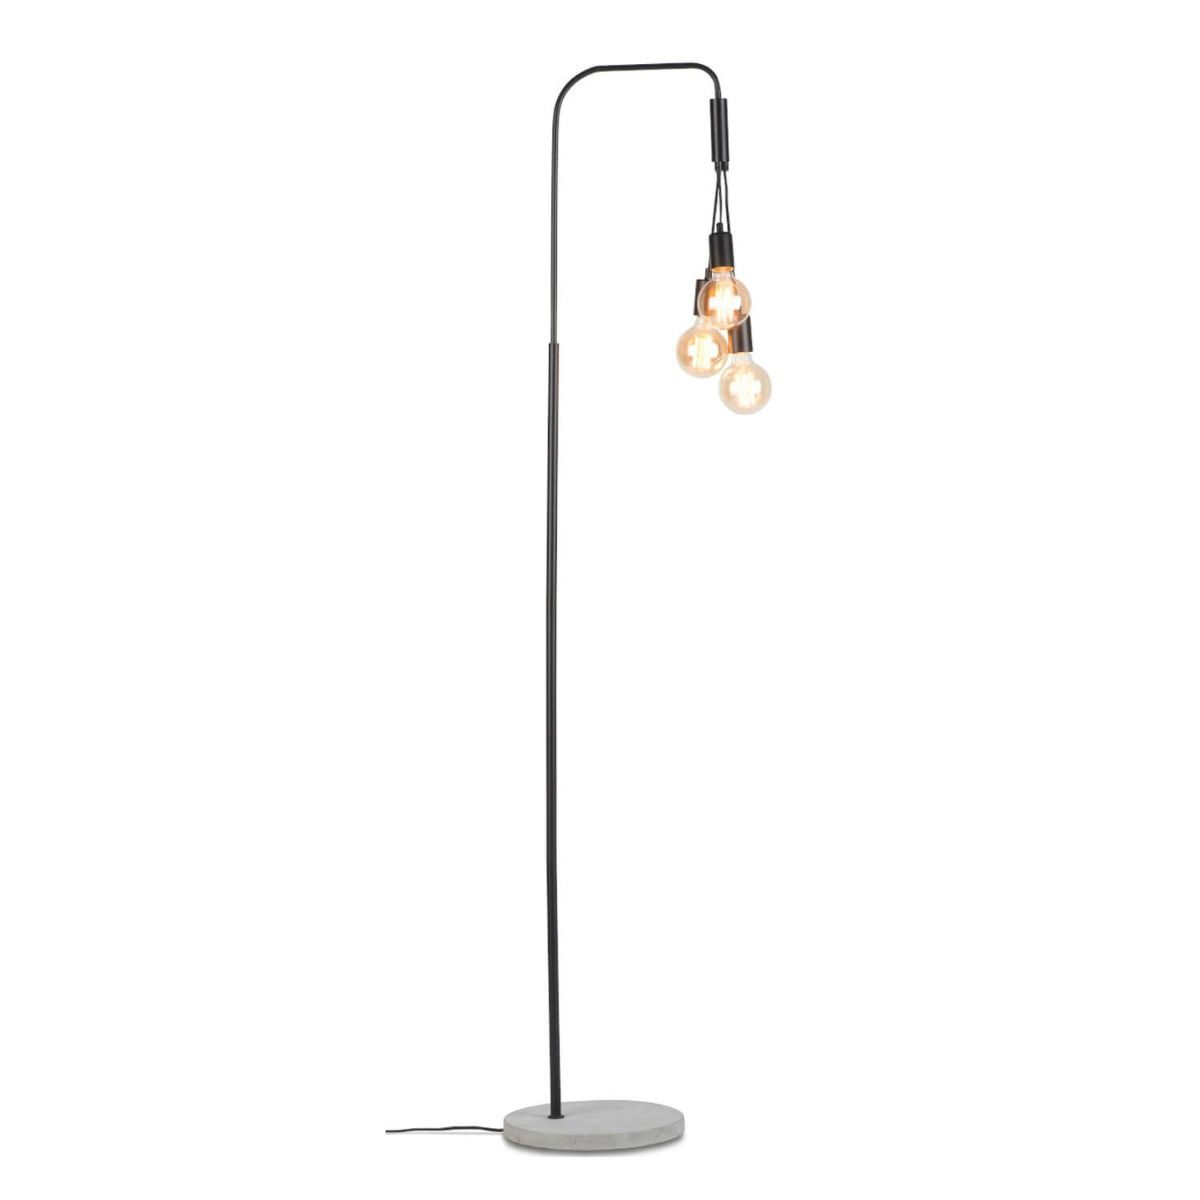 Oslo Floor Lamp with regard to size 1200 X 1200